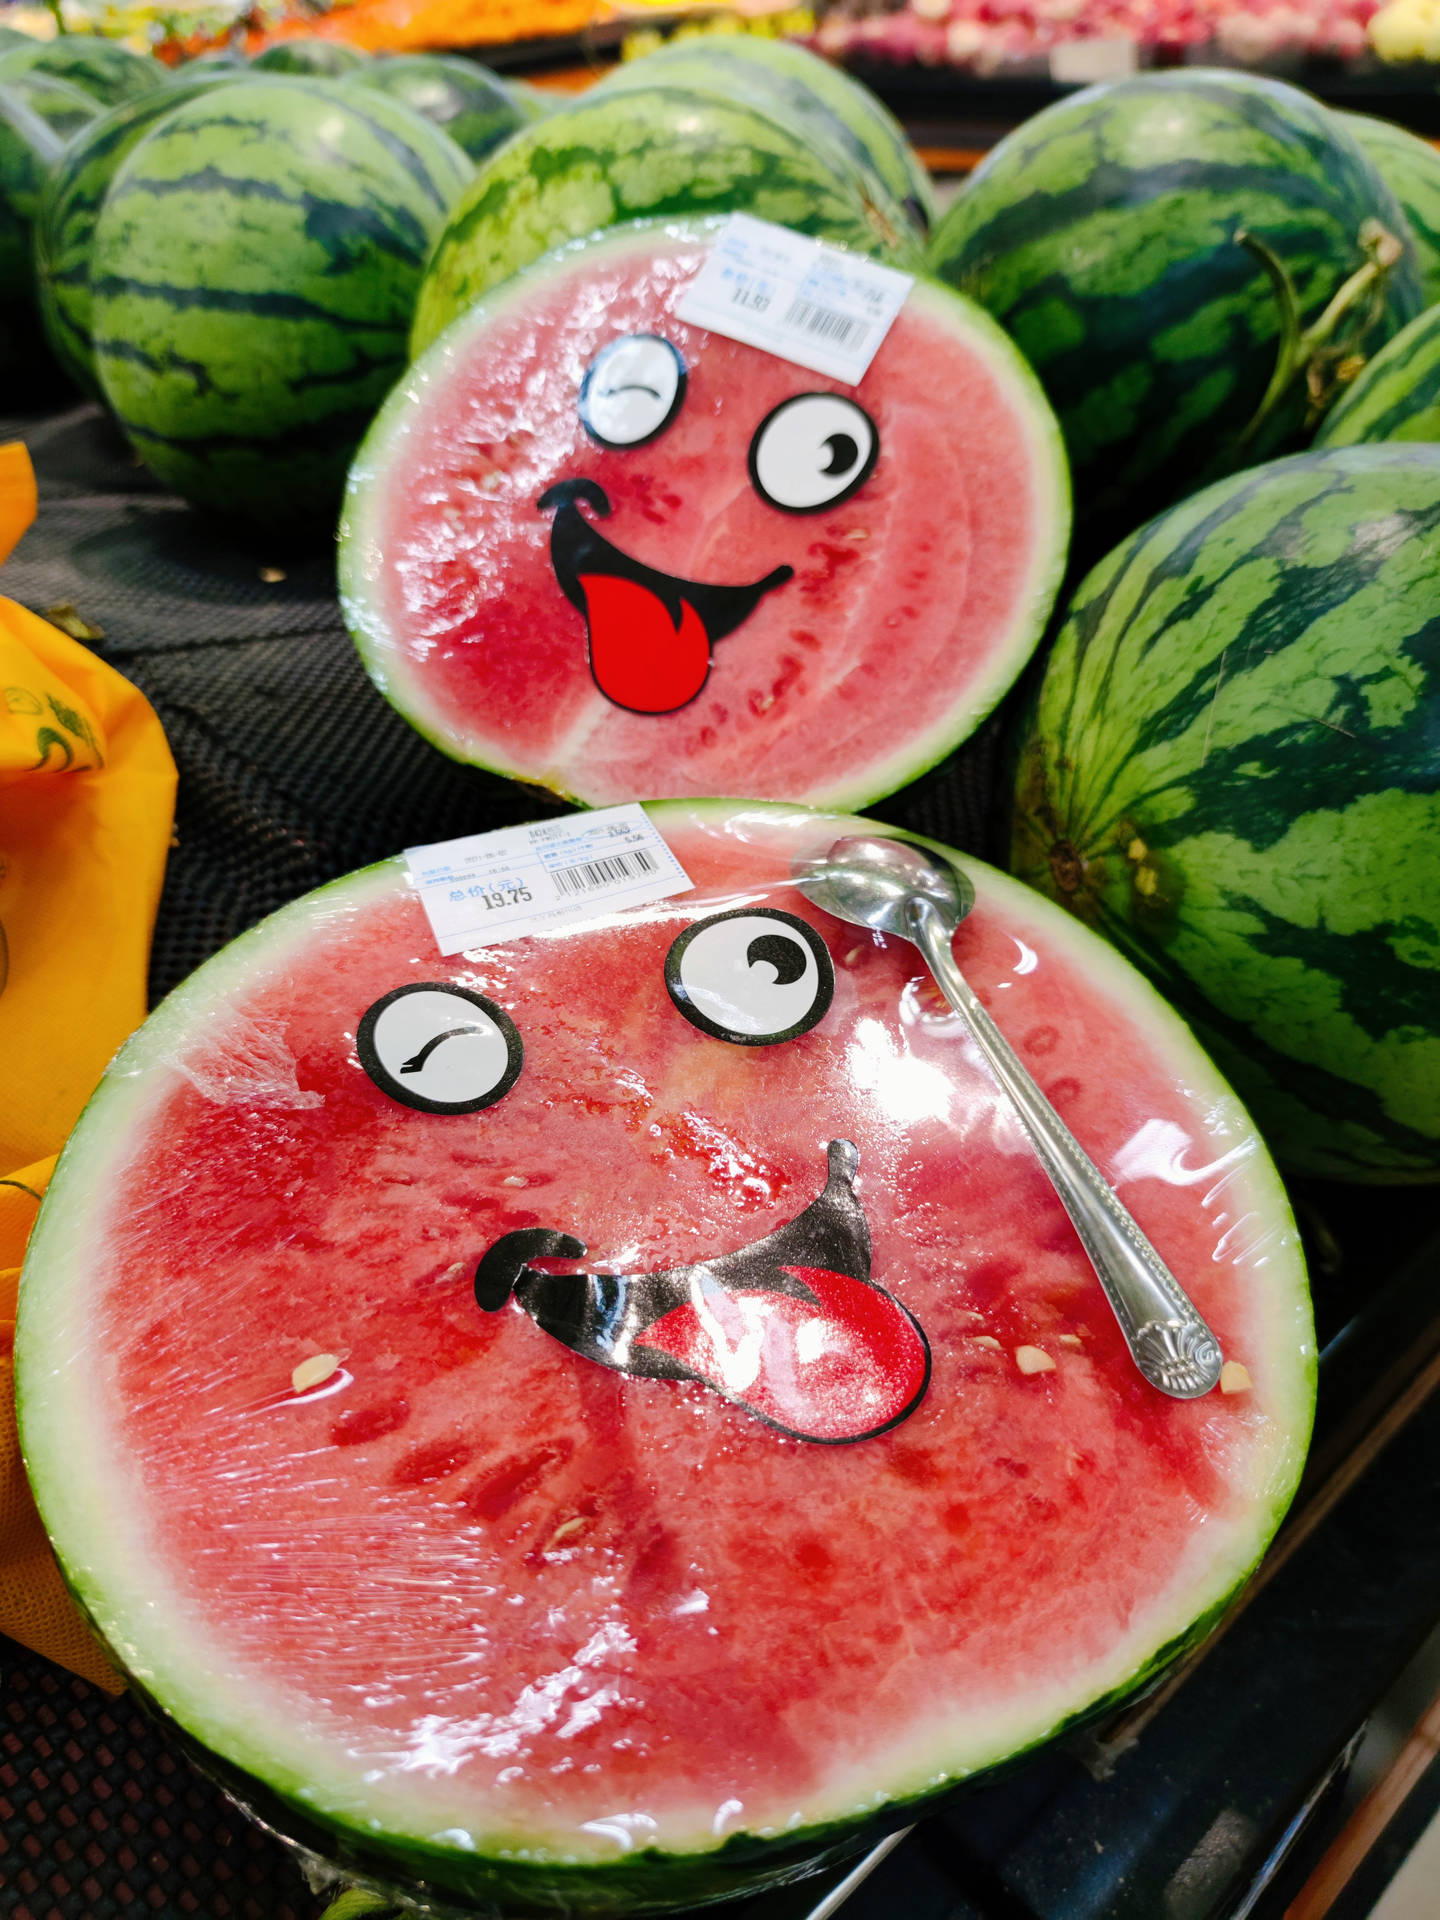 Watermelon With Cartoon Eyes